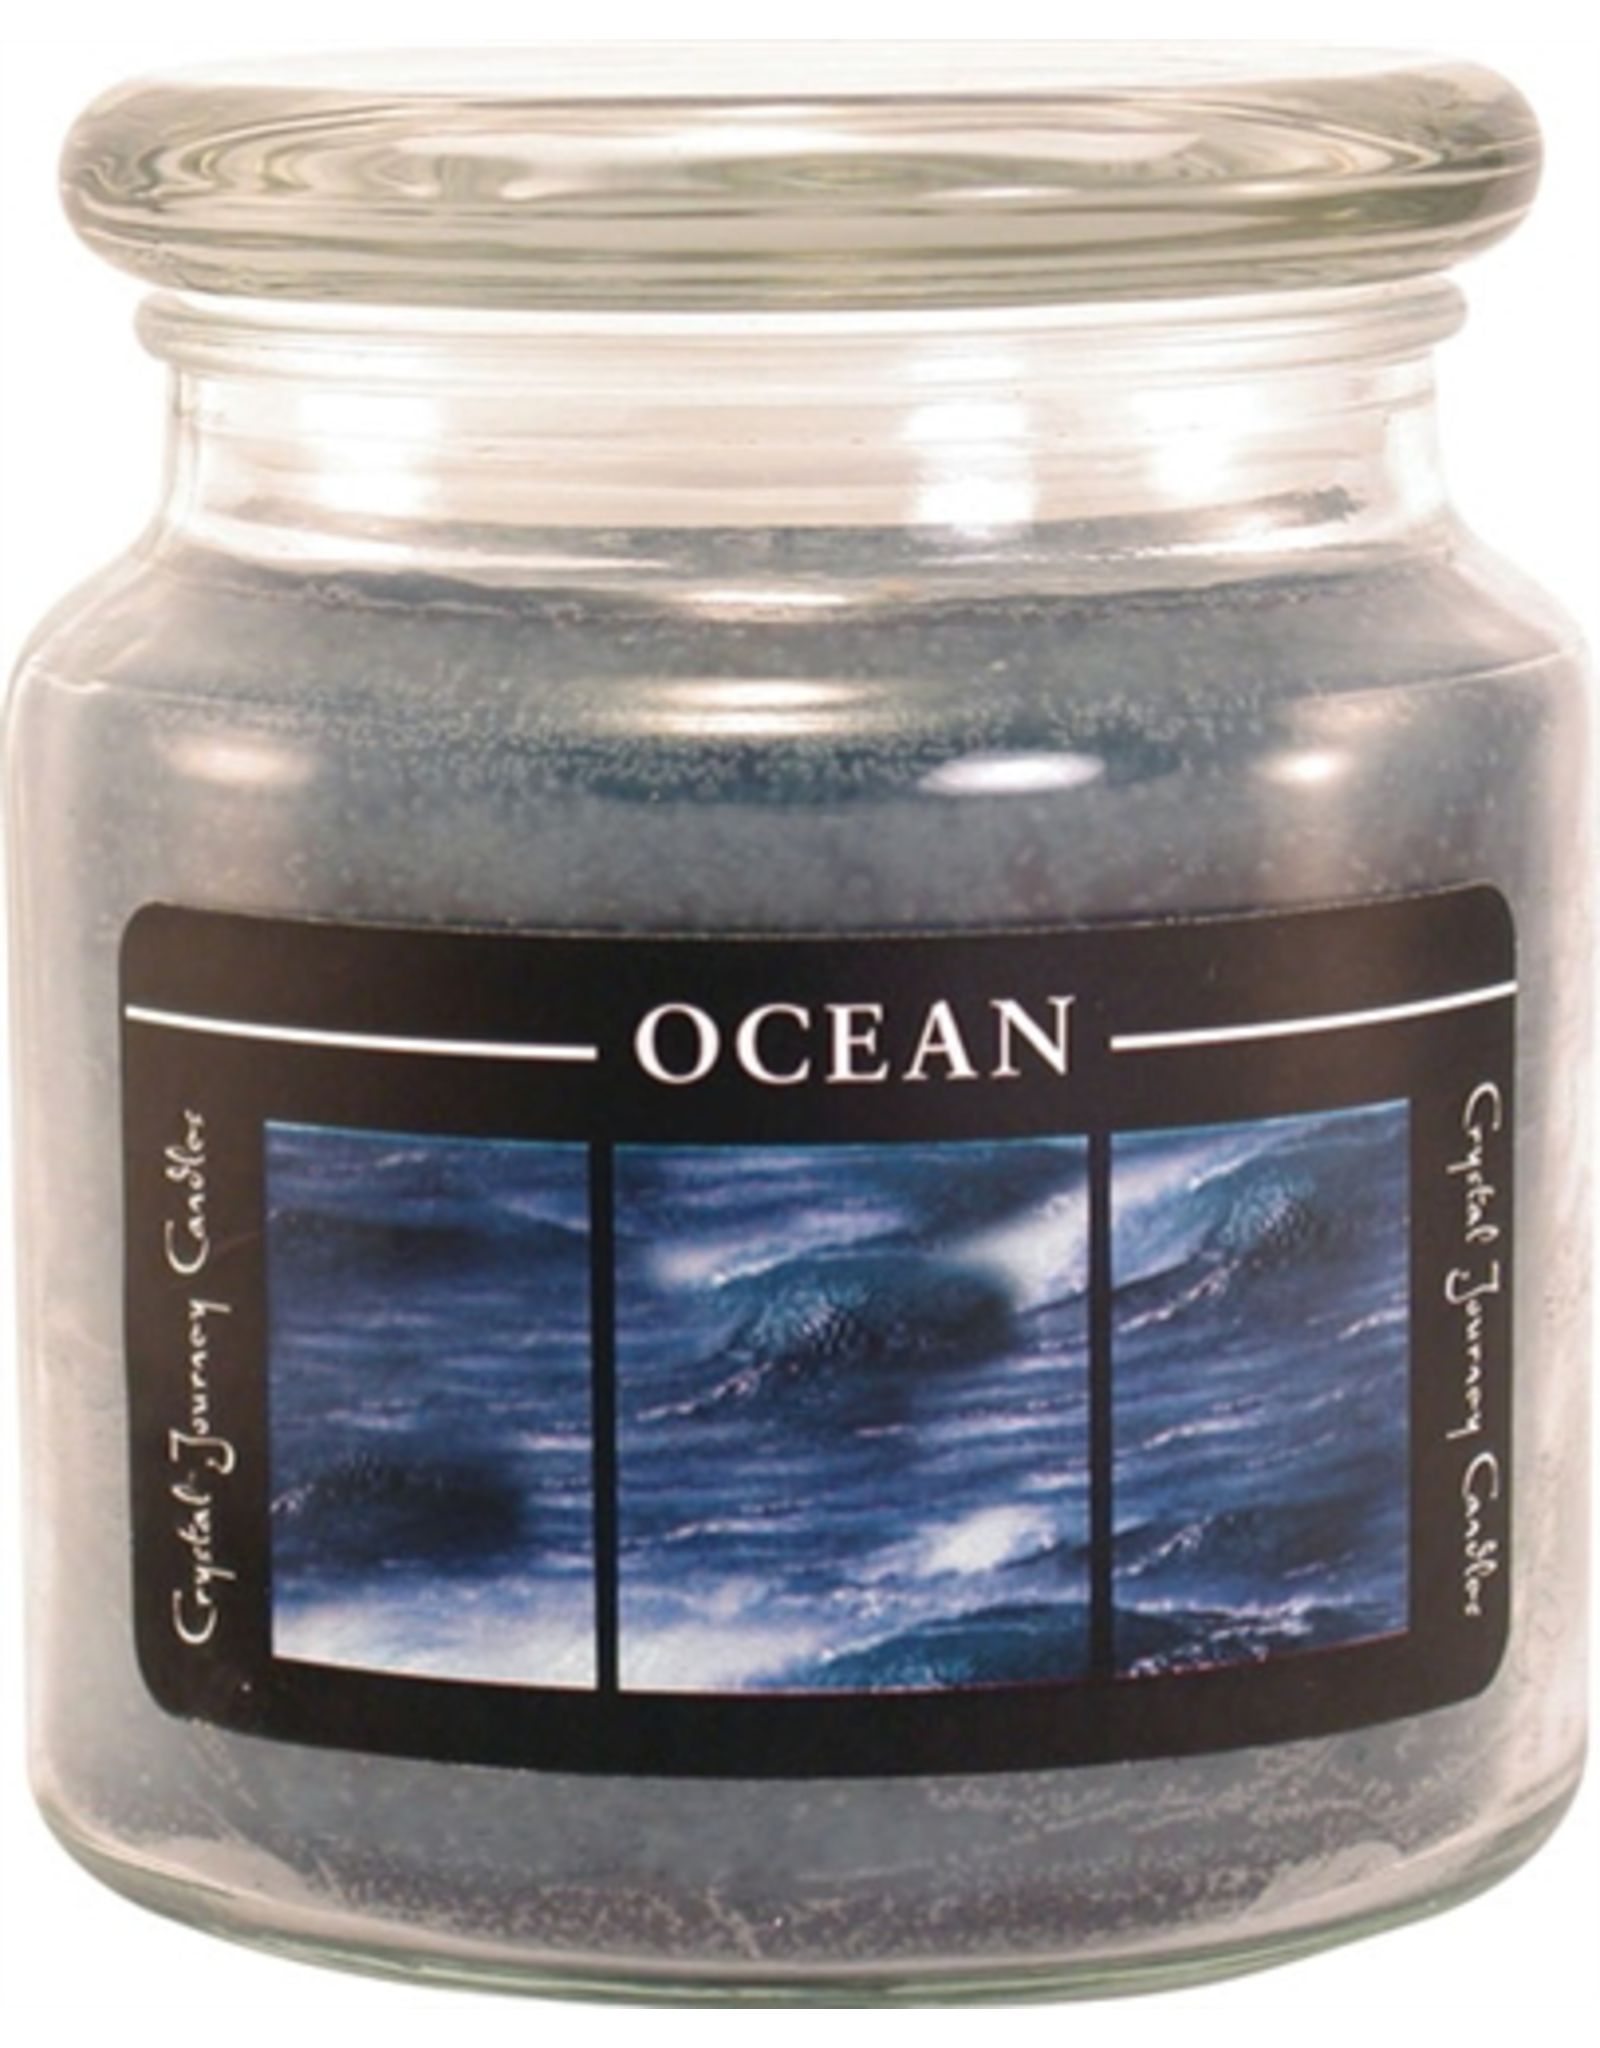 Crystal Journey Jar Candle-Ocean Breeze